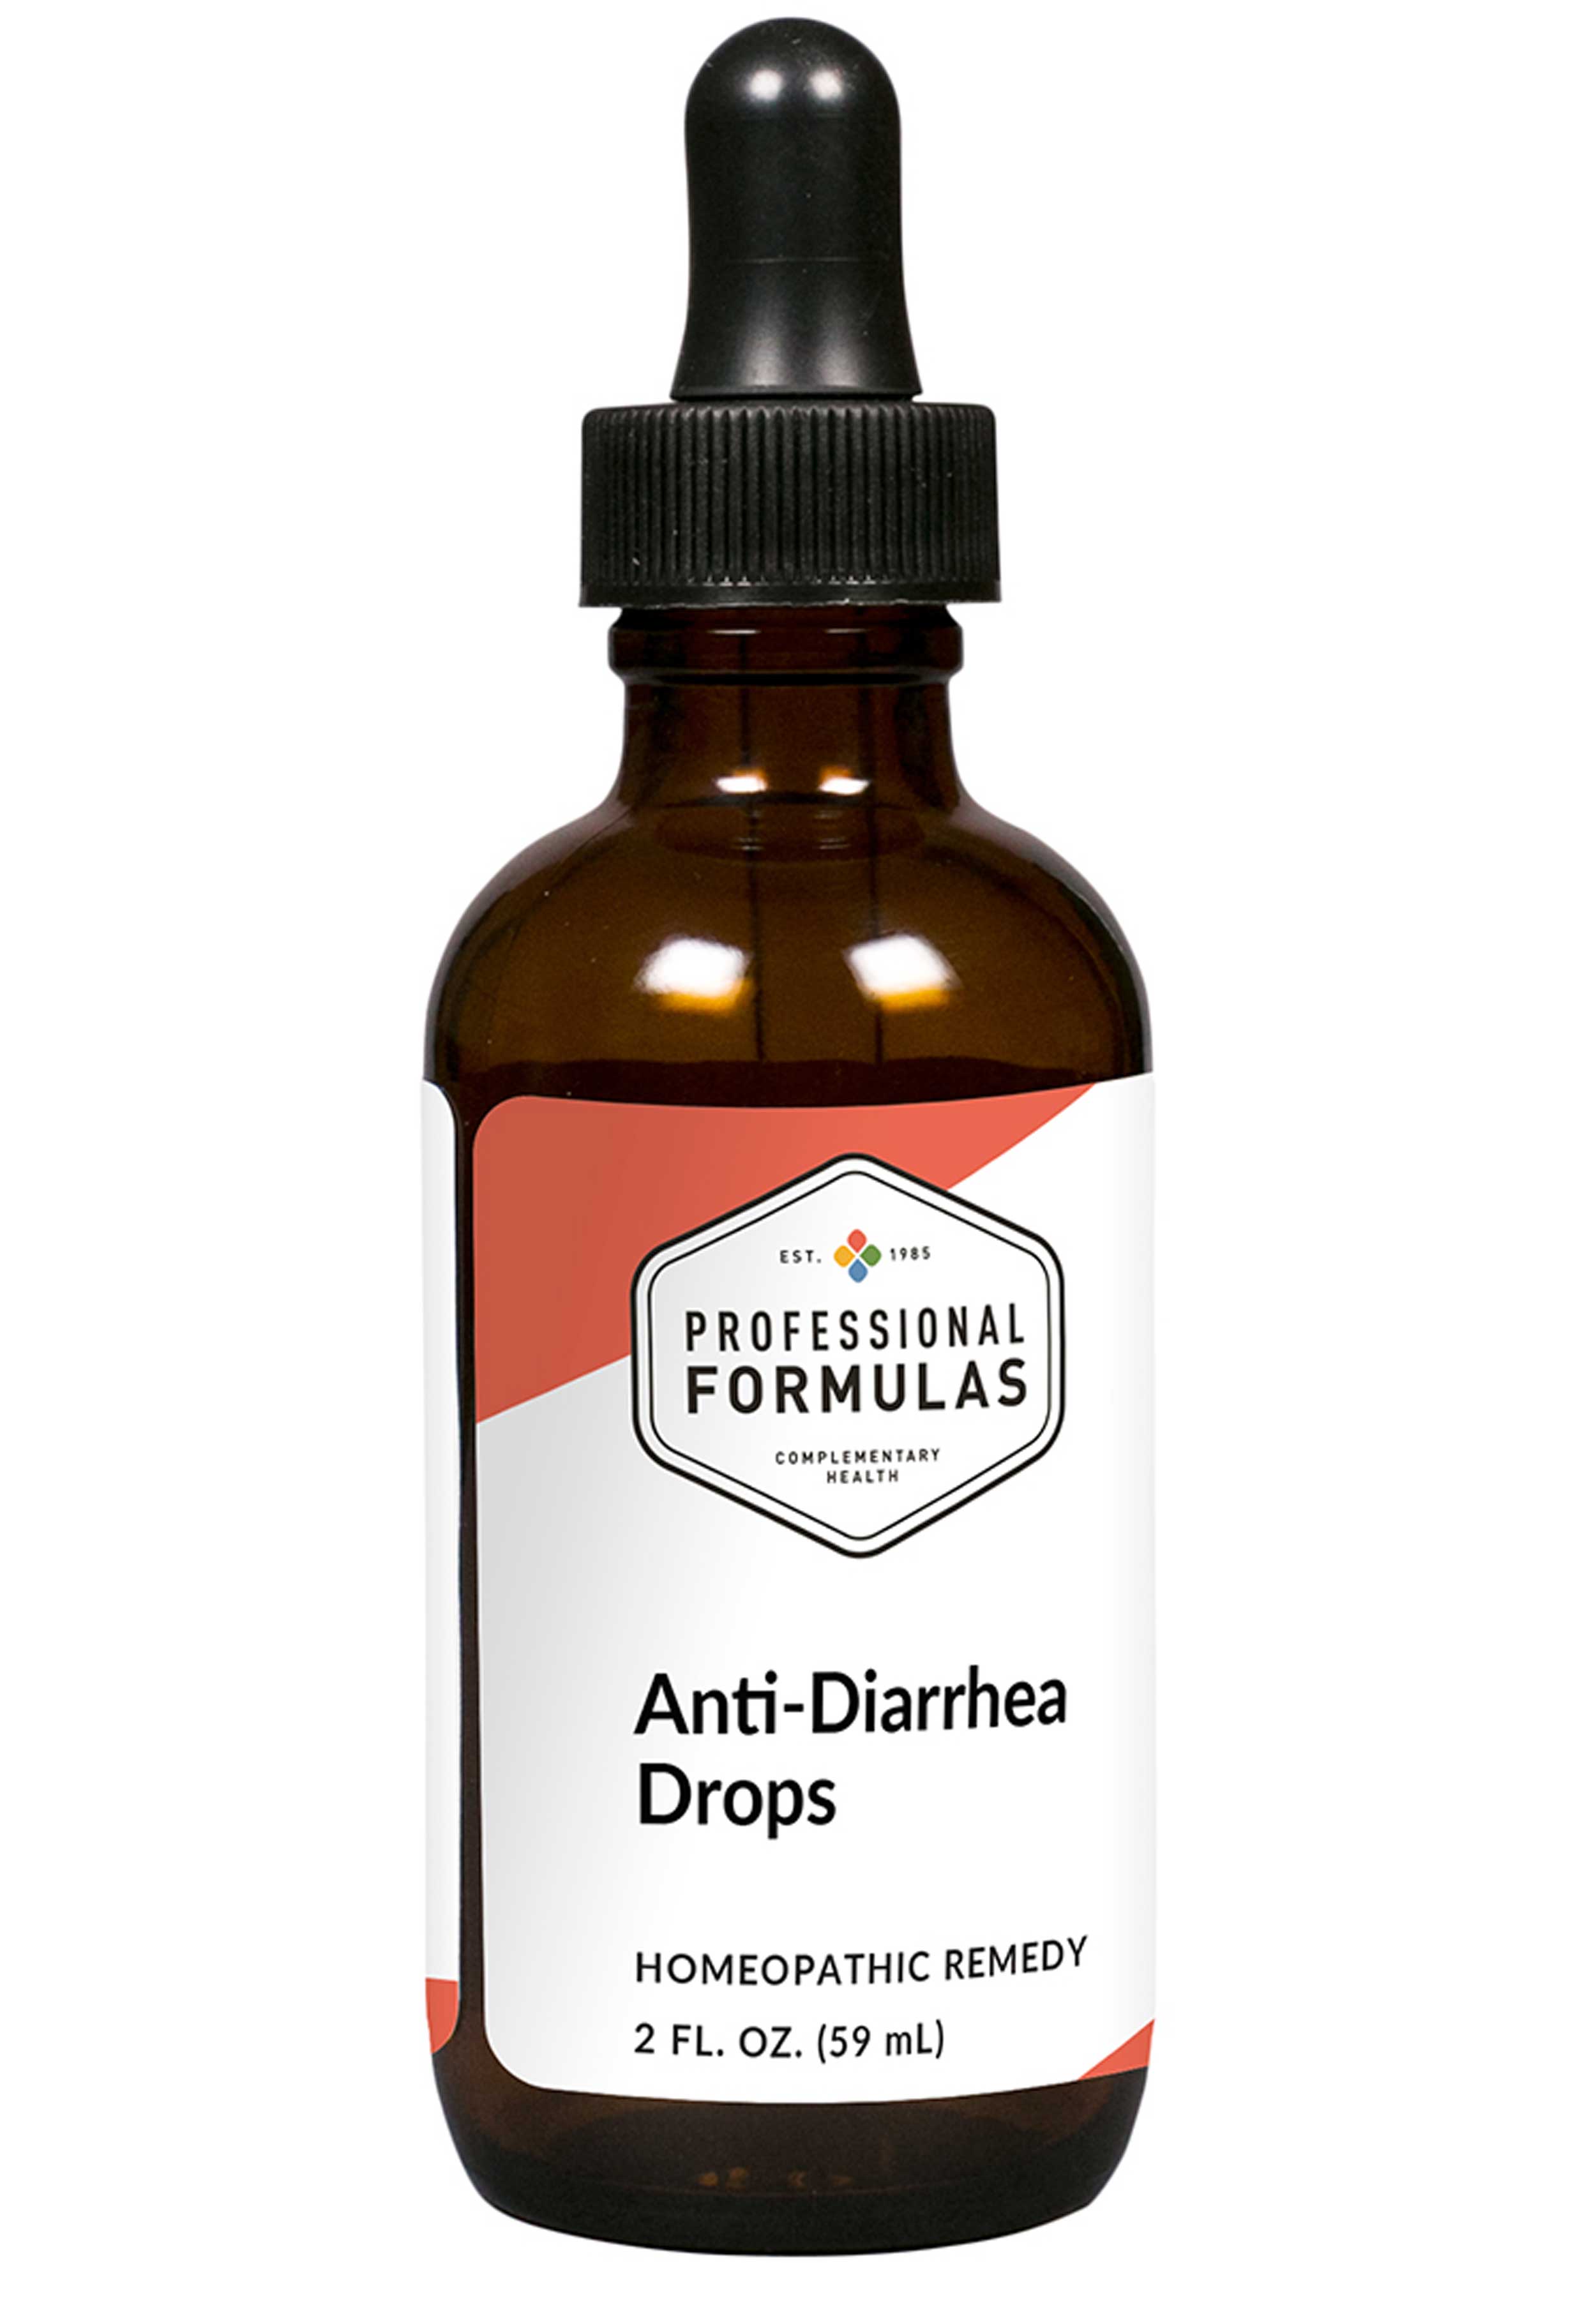 Professional Formulas Anti-Diarrhea Drops